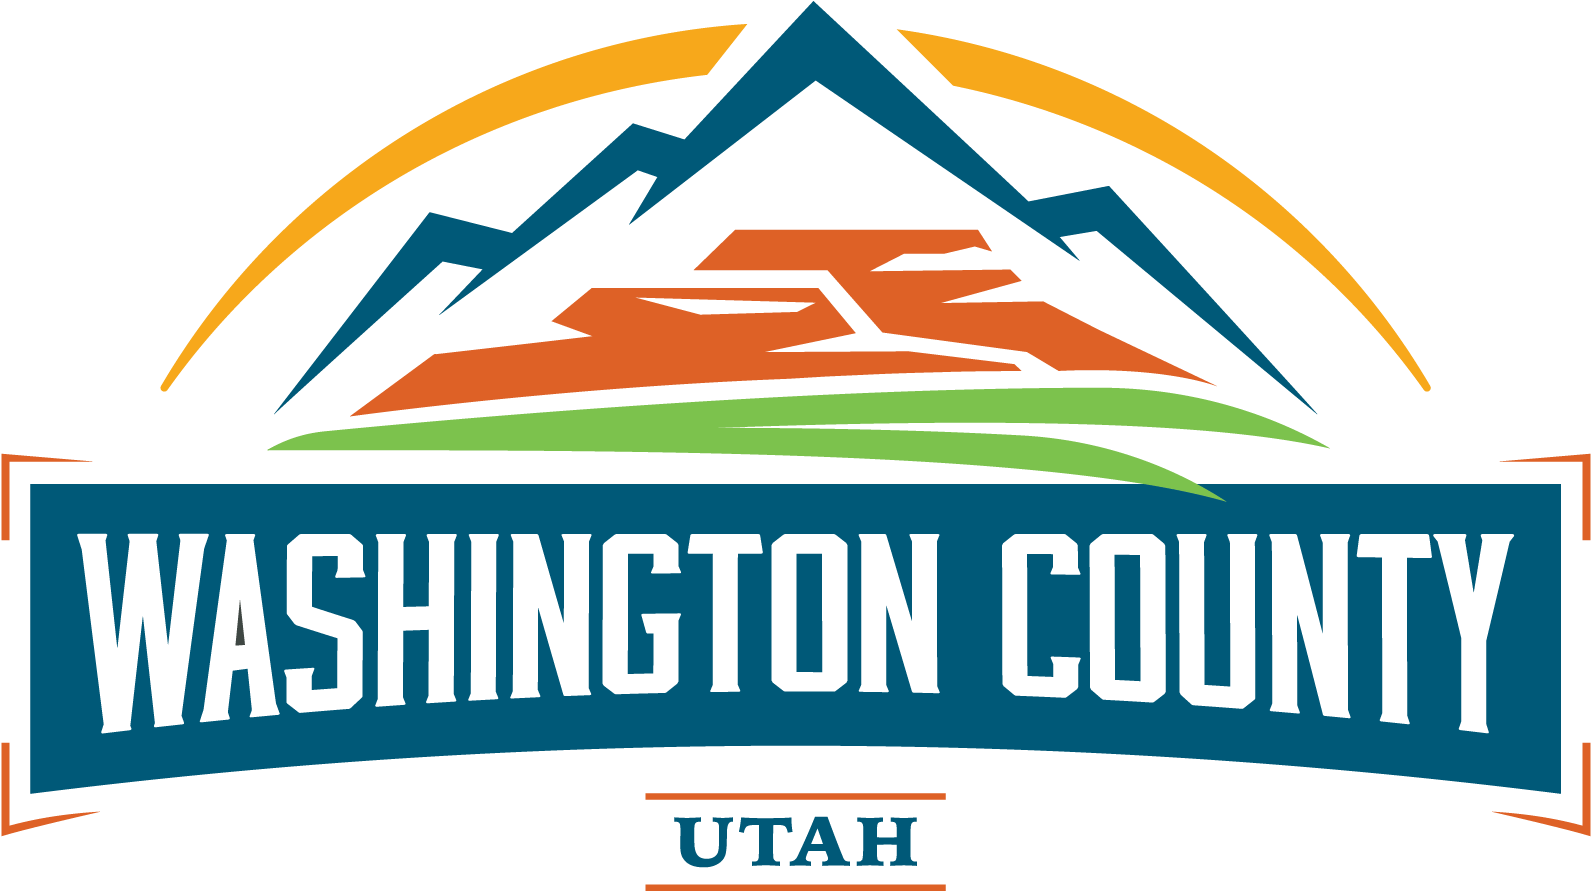 Washington County Utah (1640x940)